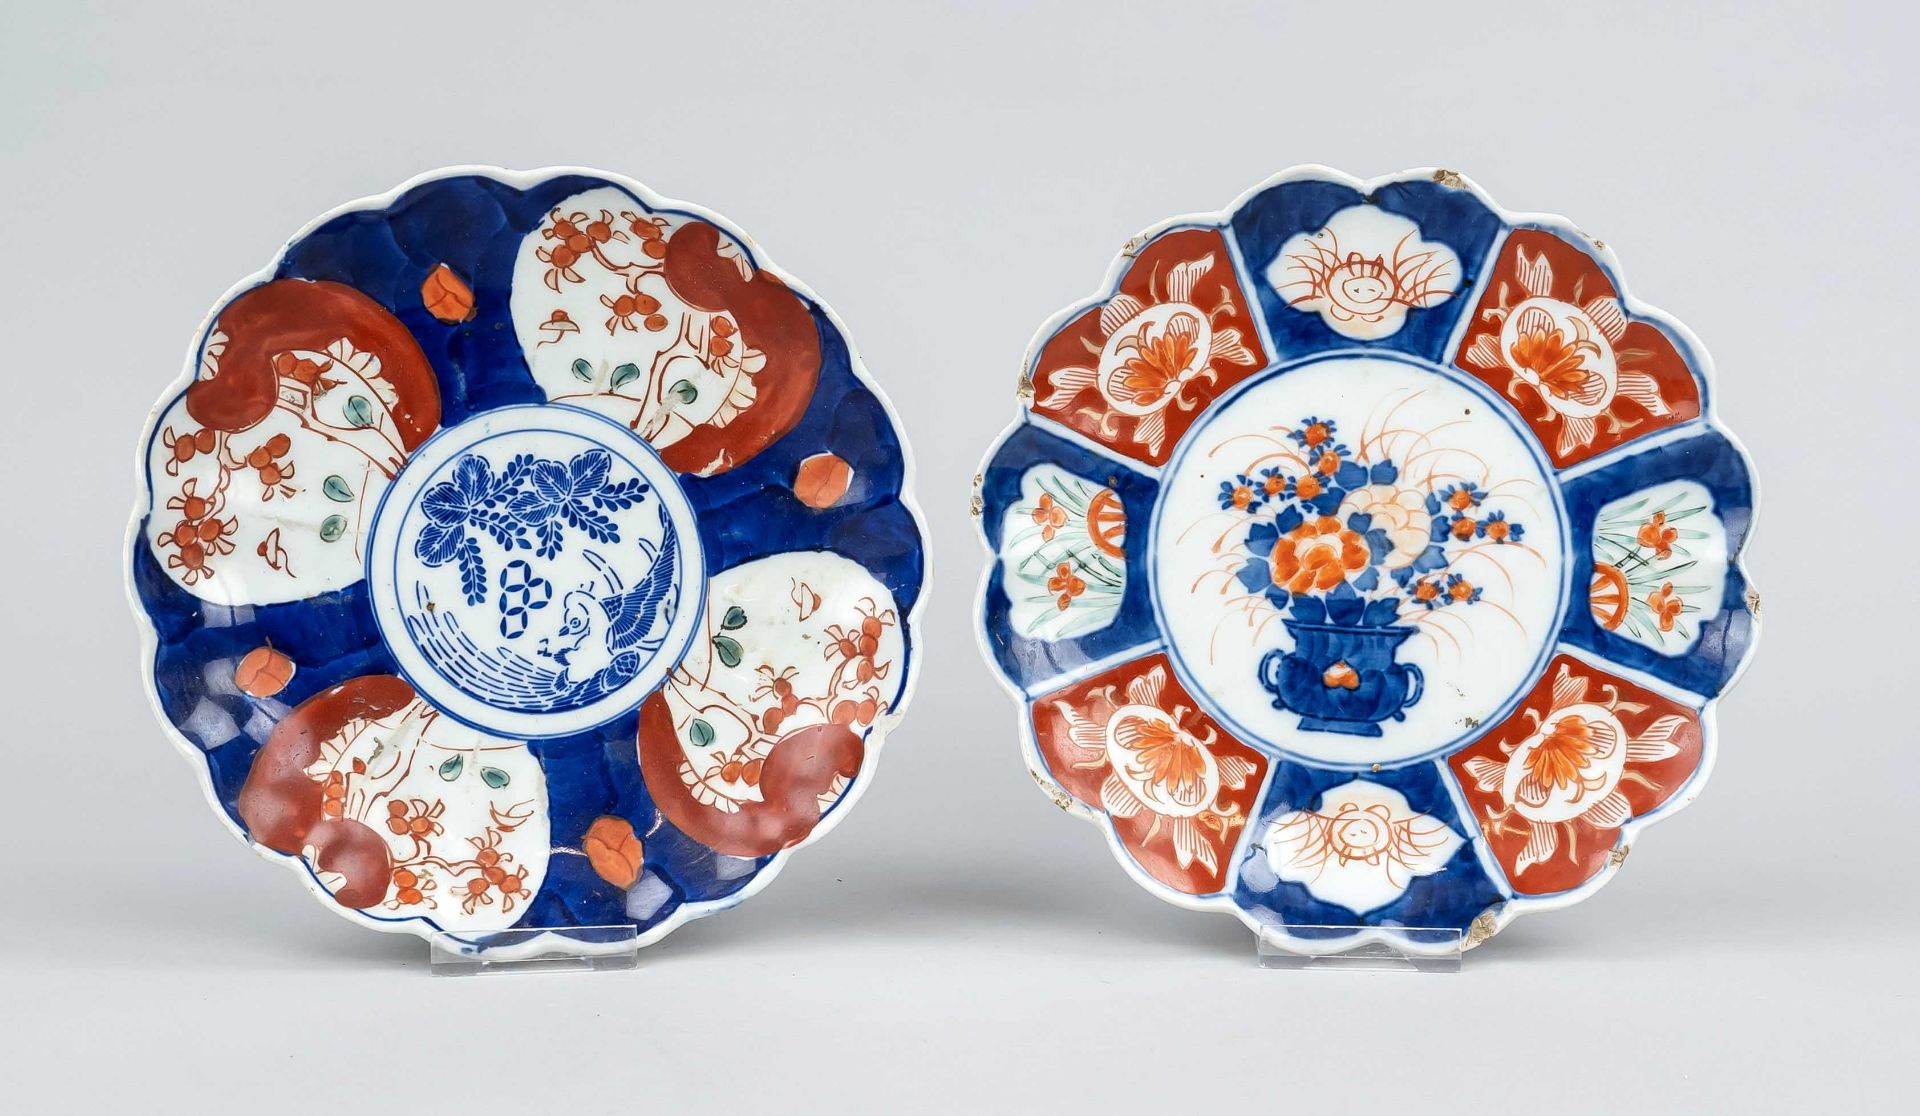 Pair of small Imari chrysanthemum plates, Japan, Meiji period(1868-1912), c. 1900, porcelain with